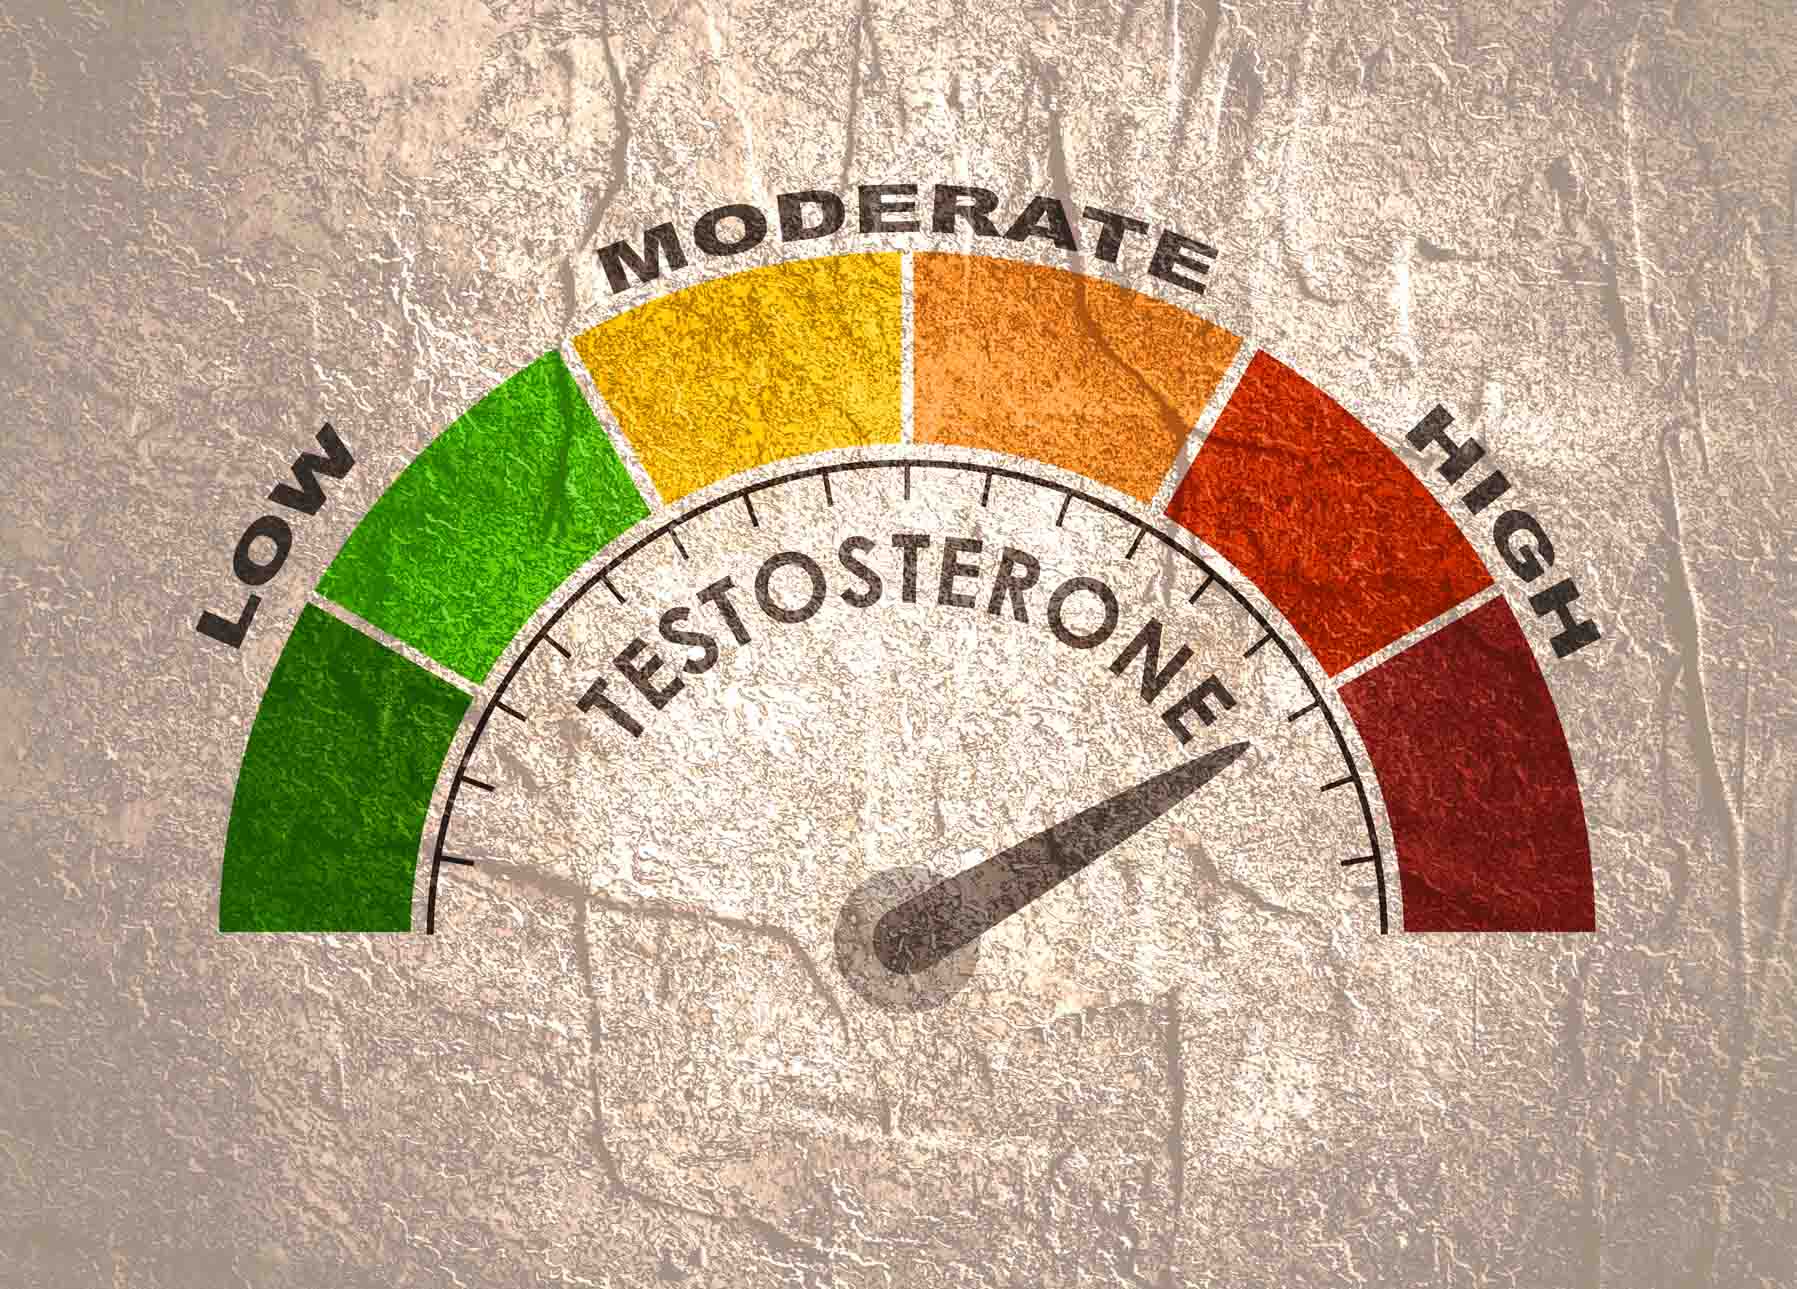 Hormone testosterone level measuring scale. Health care concept illustration.